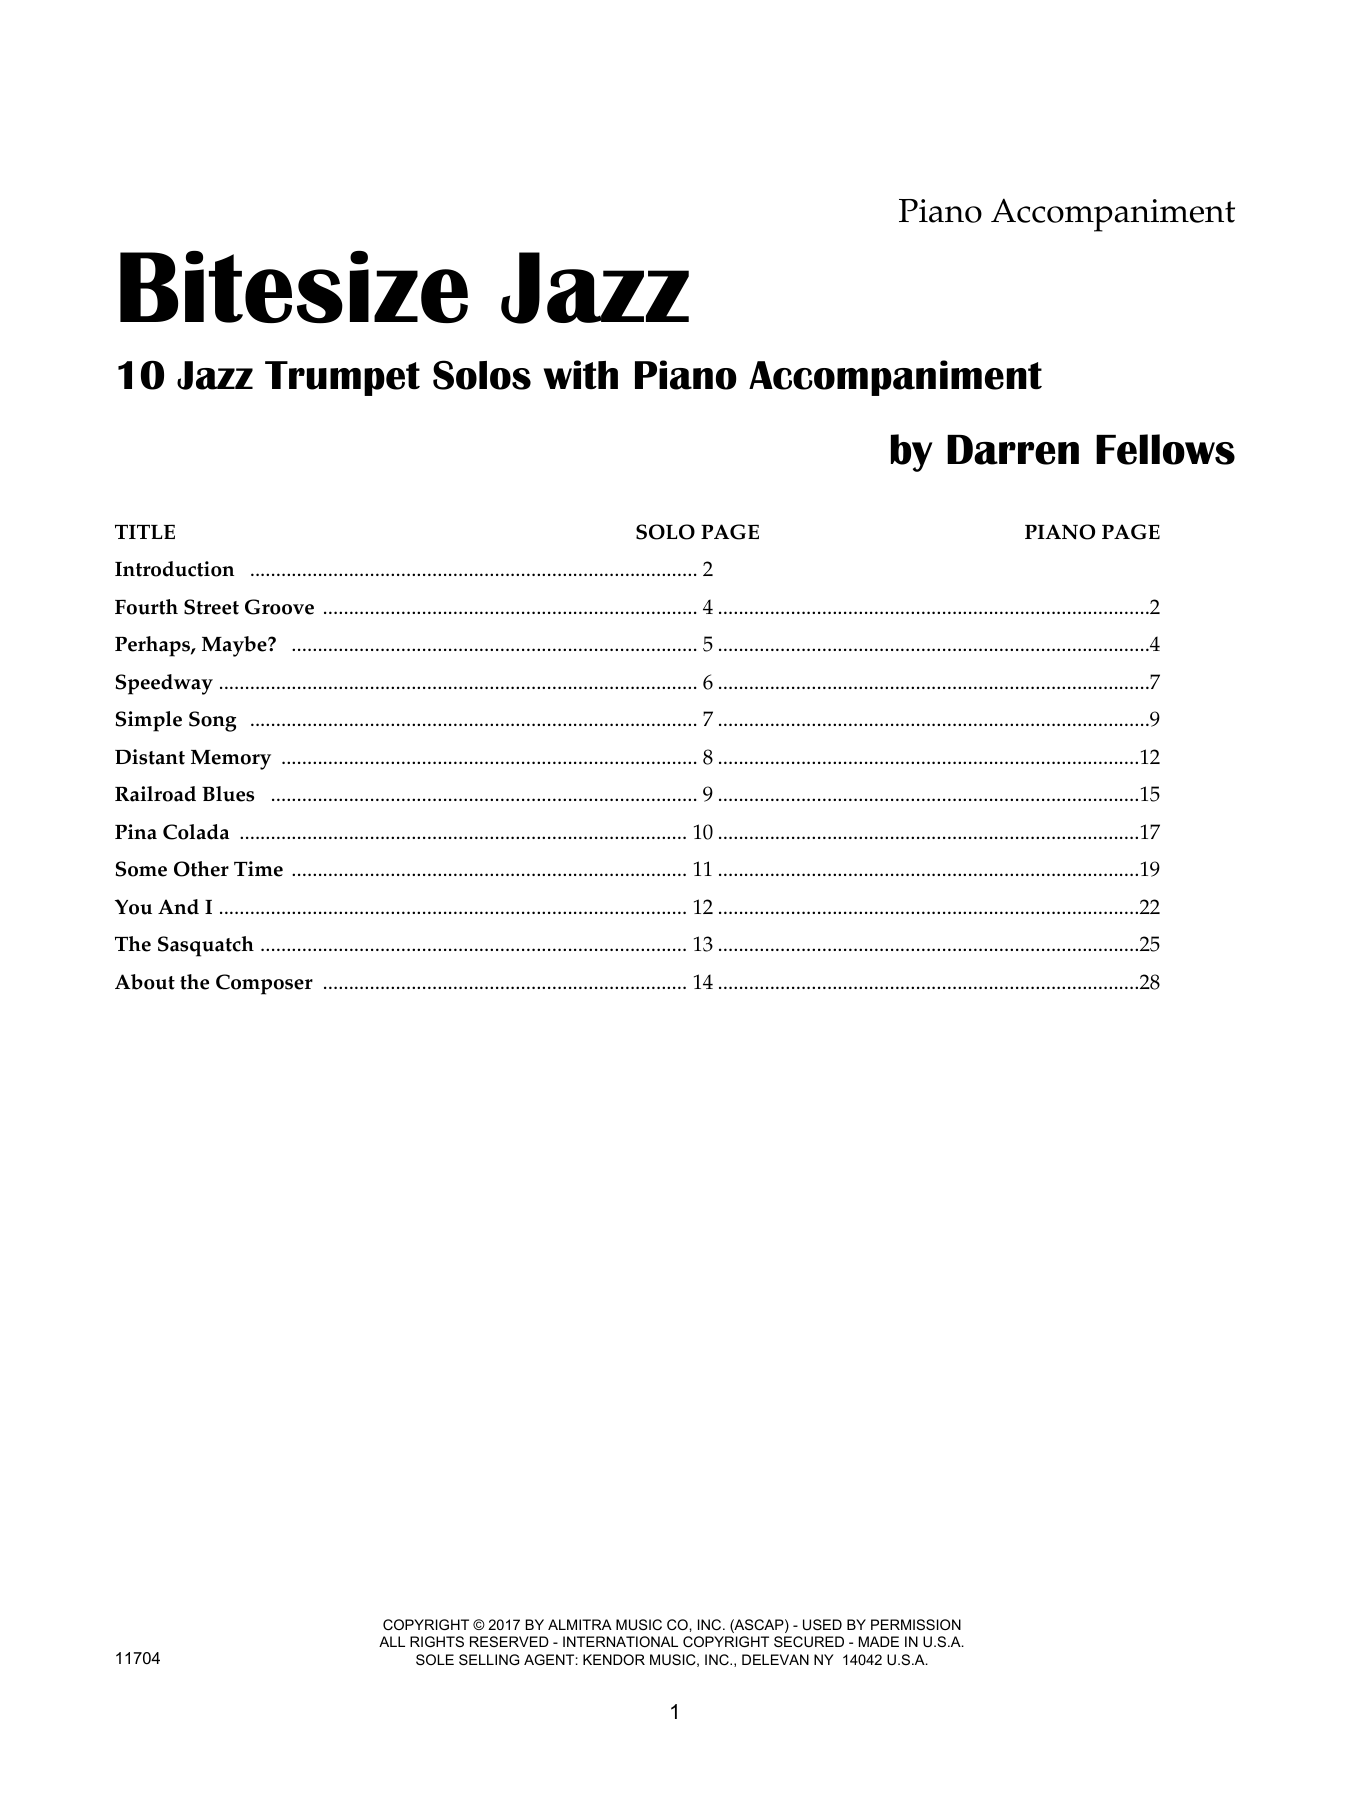 Bitesize Jazz - Piano Accompaniment (Brass Solo) von Darren Fellows